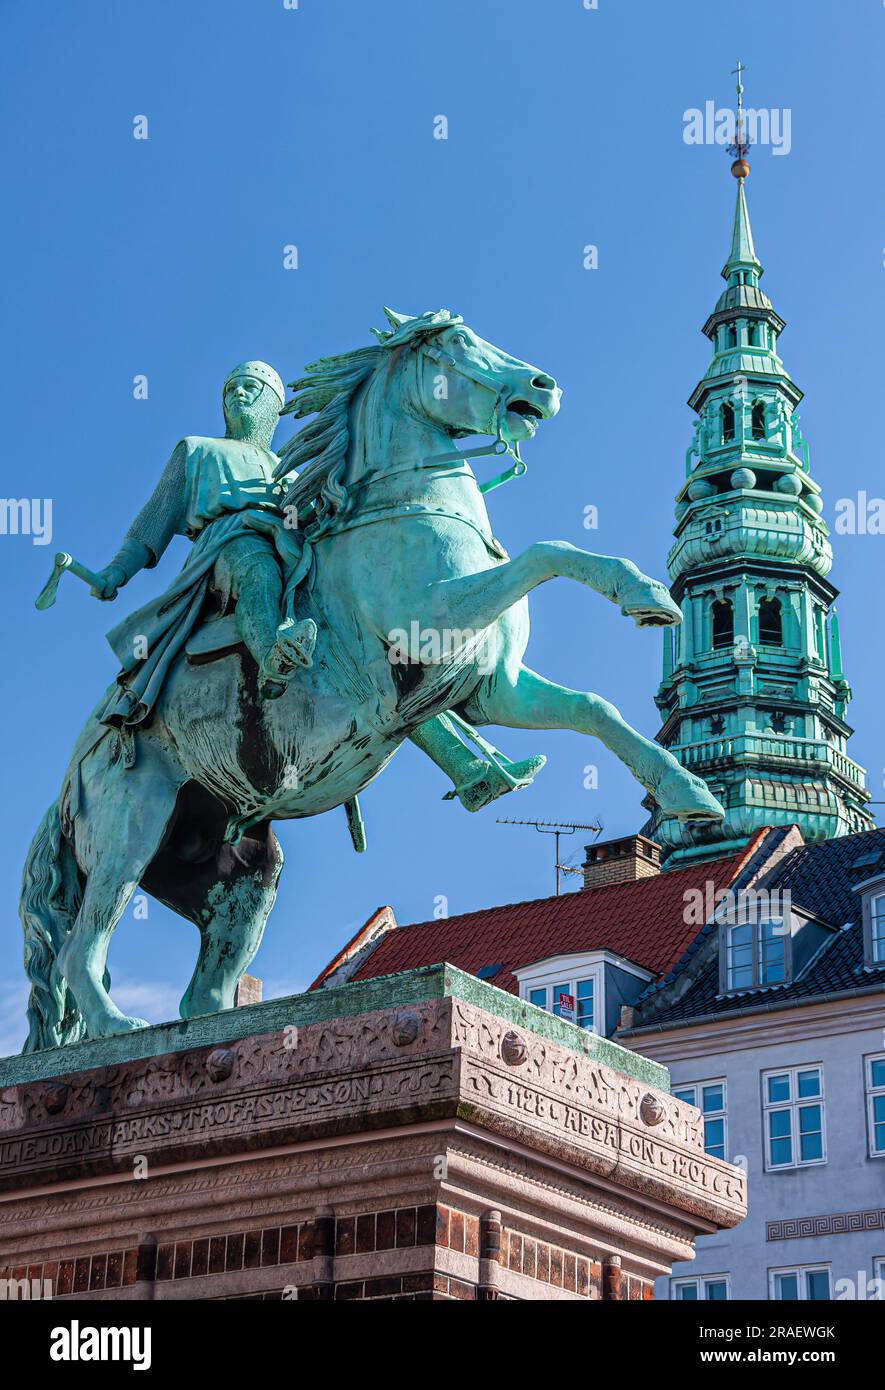 Copenhagen, Denmark - September 15, 2010: Equestrian statue of Absalon closeup stands on Hojbro Plads under blue sky. Nikolaj Kunsthallen ex church to Stock Photo